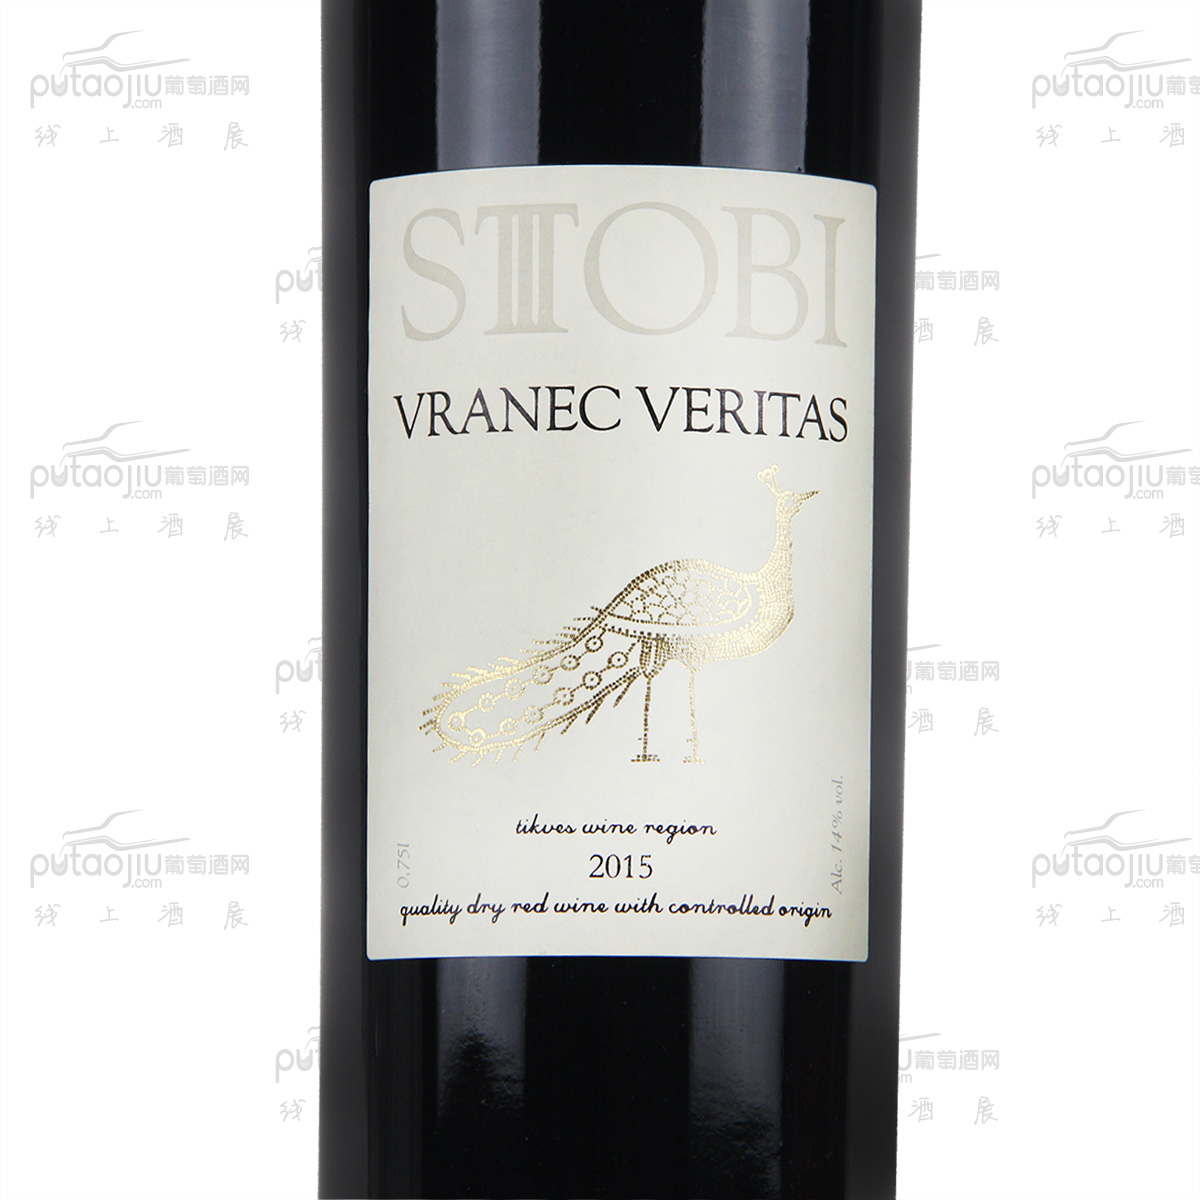 STOBI斯多比酒庄(Vranec Veritas)韵丽威达A级干红葡萄酒小众国家原装进口北马其顿红酒